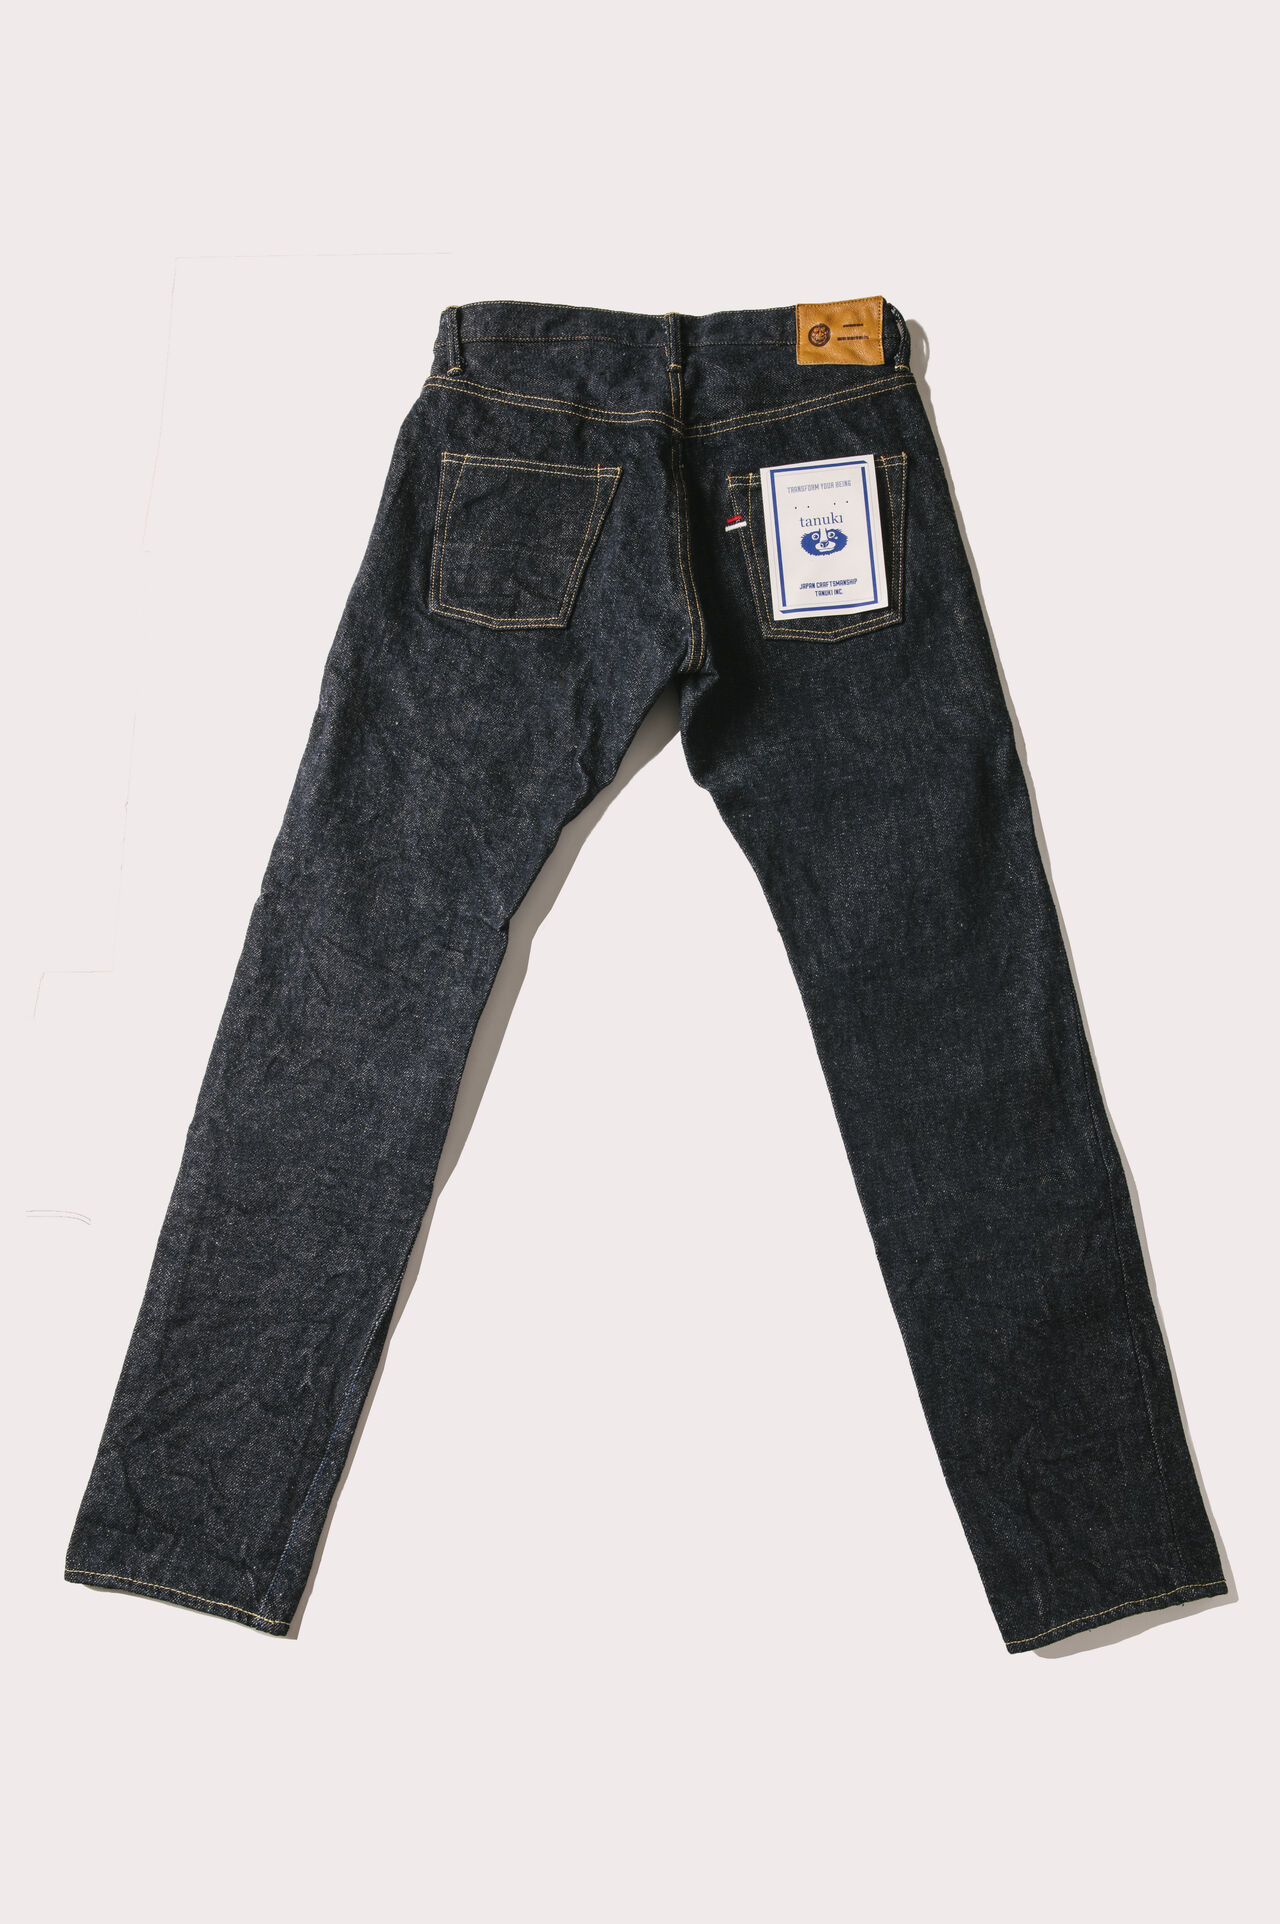 OTNHT ONI x TANUKI Collaboration 20oz Natural Indigo Secret Denim High Tapered Jeans,, large image number 10